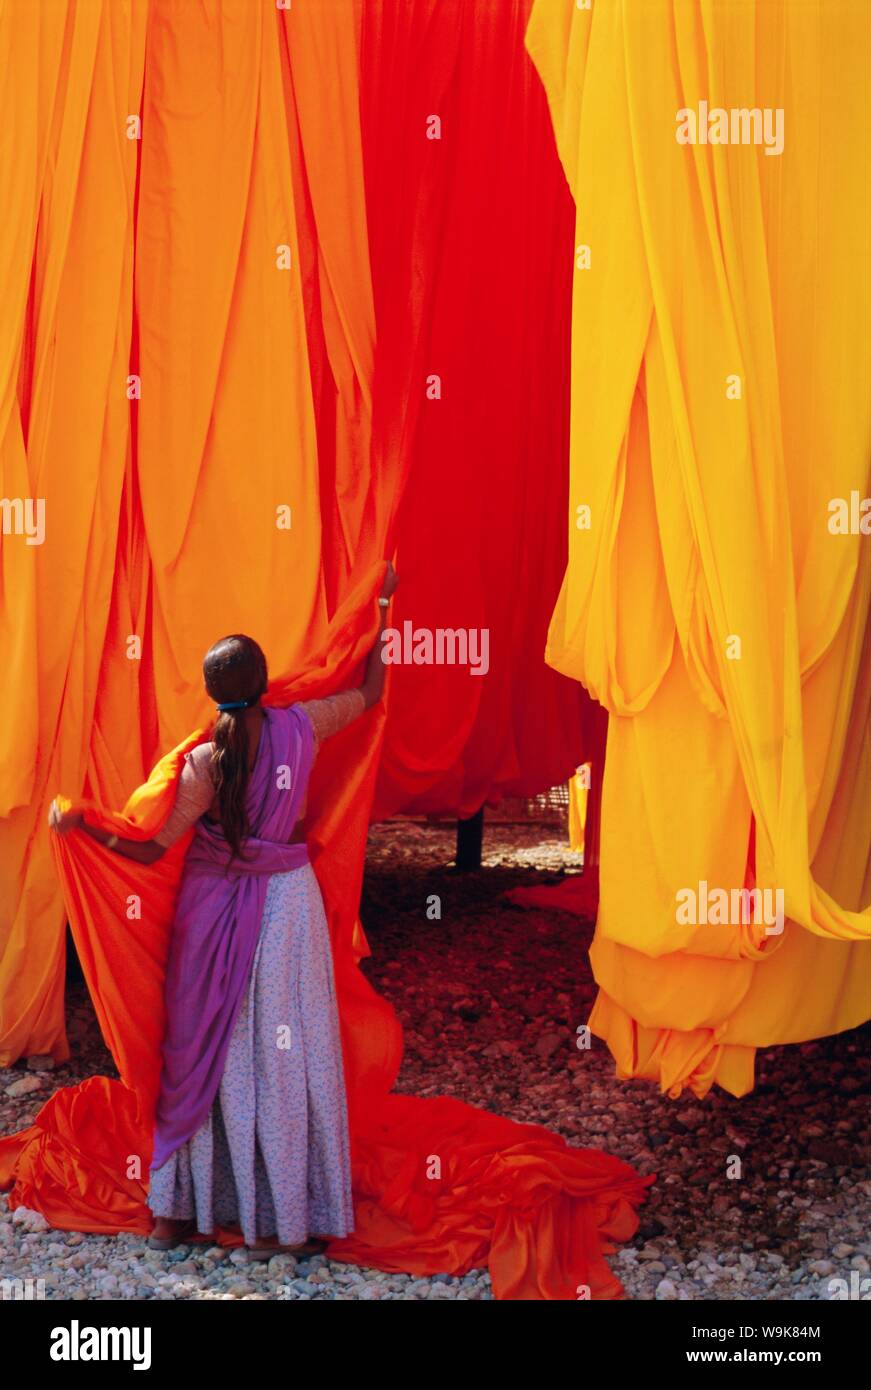 Sari, fábrica de prendas de vestir, Rajasthan, India Foto de stock